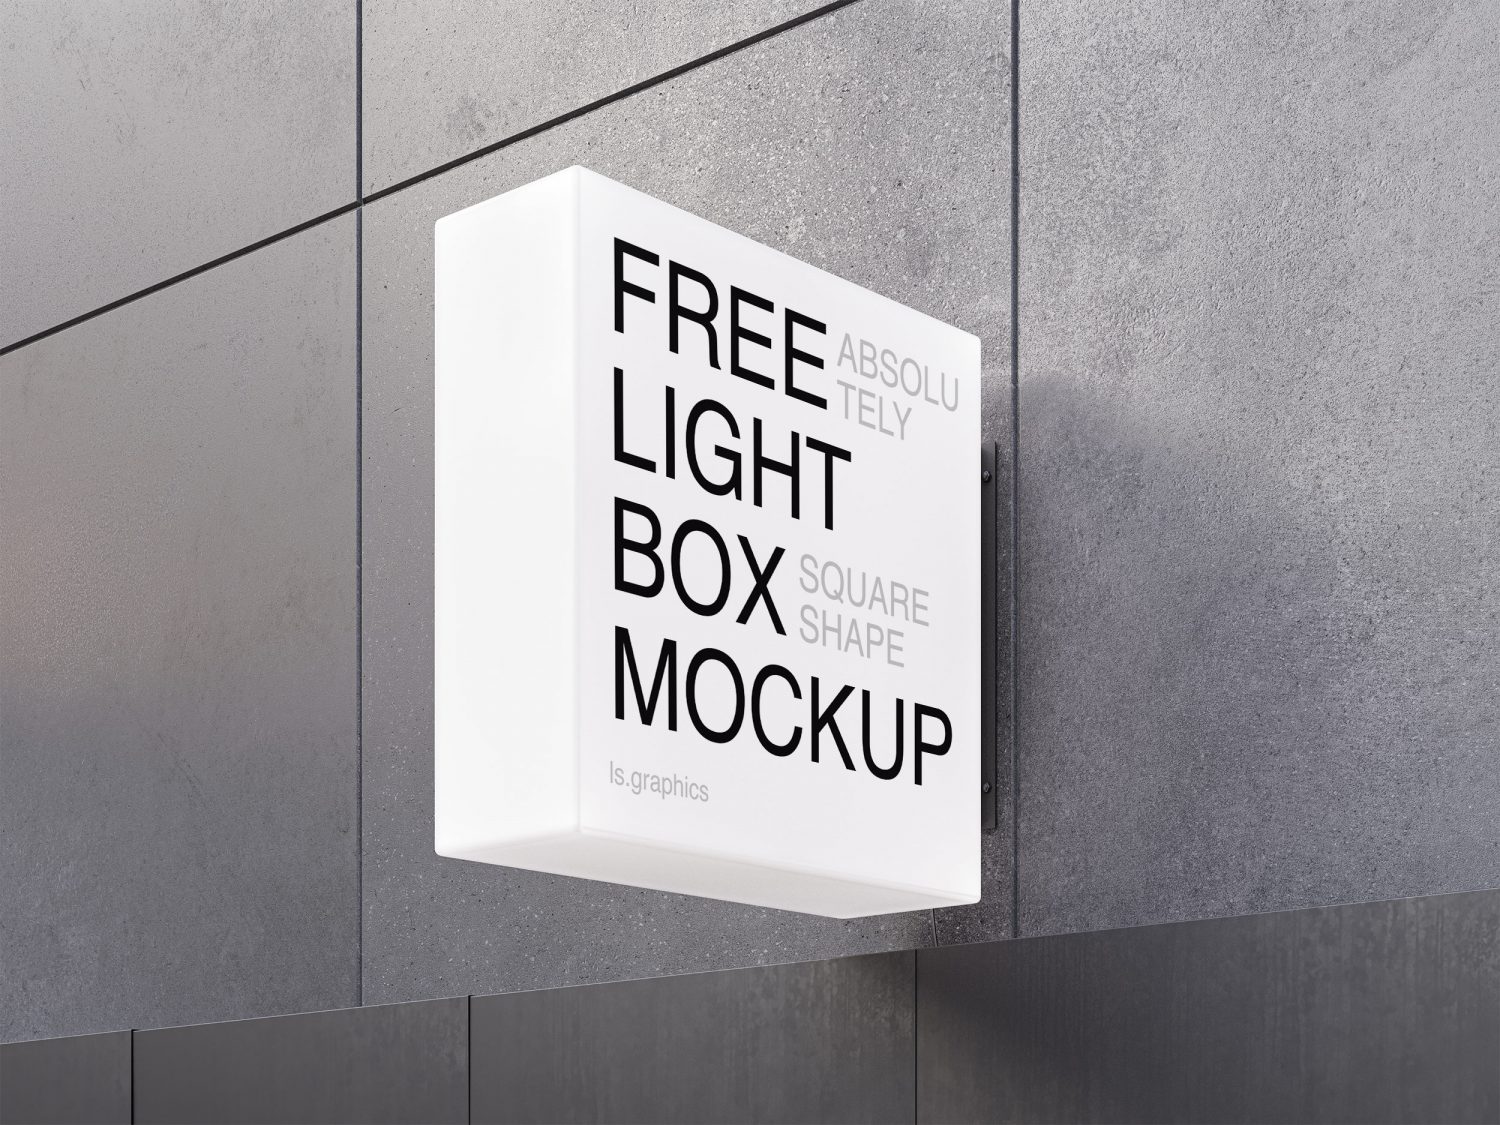 Lightbox Sign Mockup